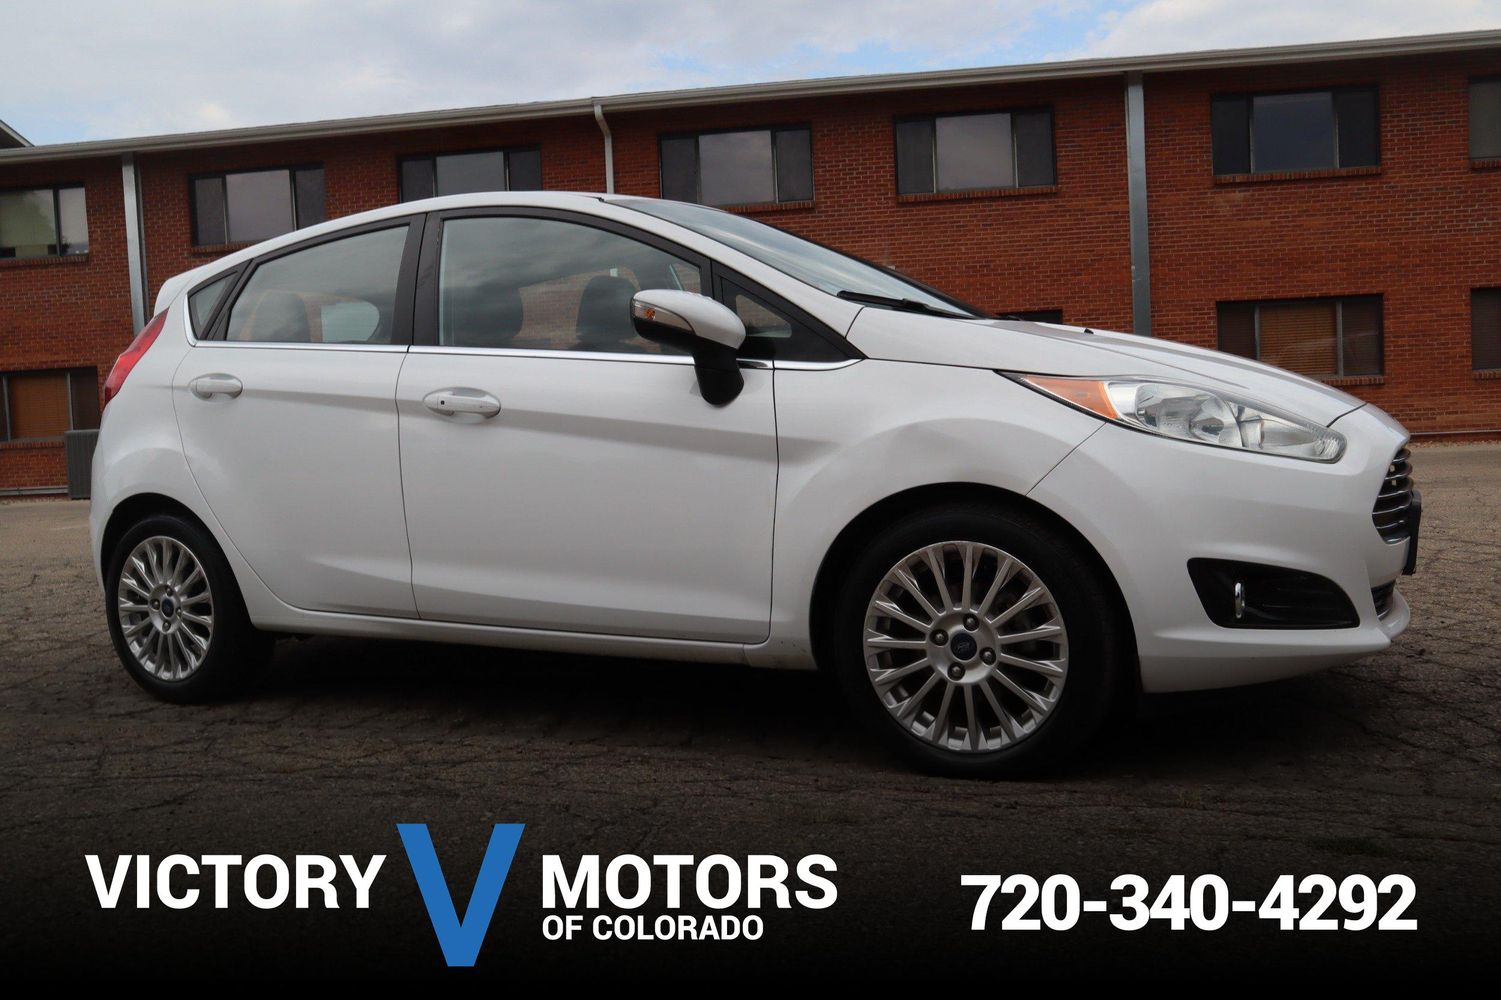 herhaling Afrikaanse Antecedent 2014 Ford Fiesta Titanium | Victory Motors of Colorado